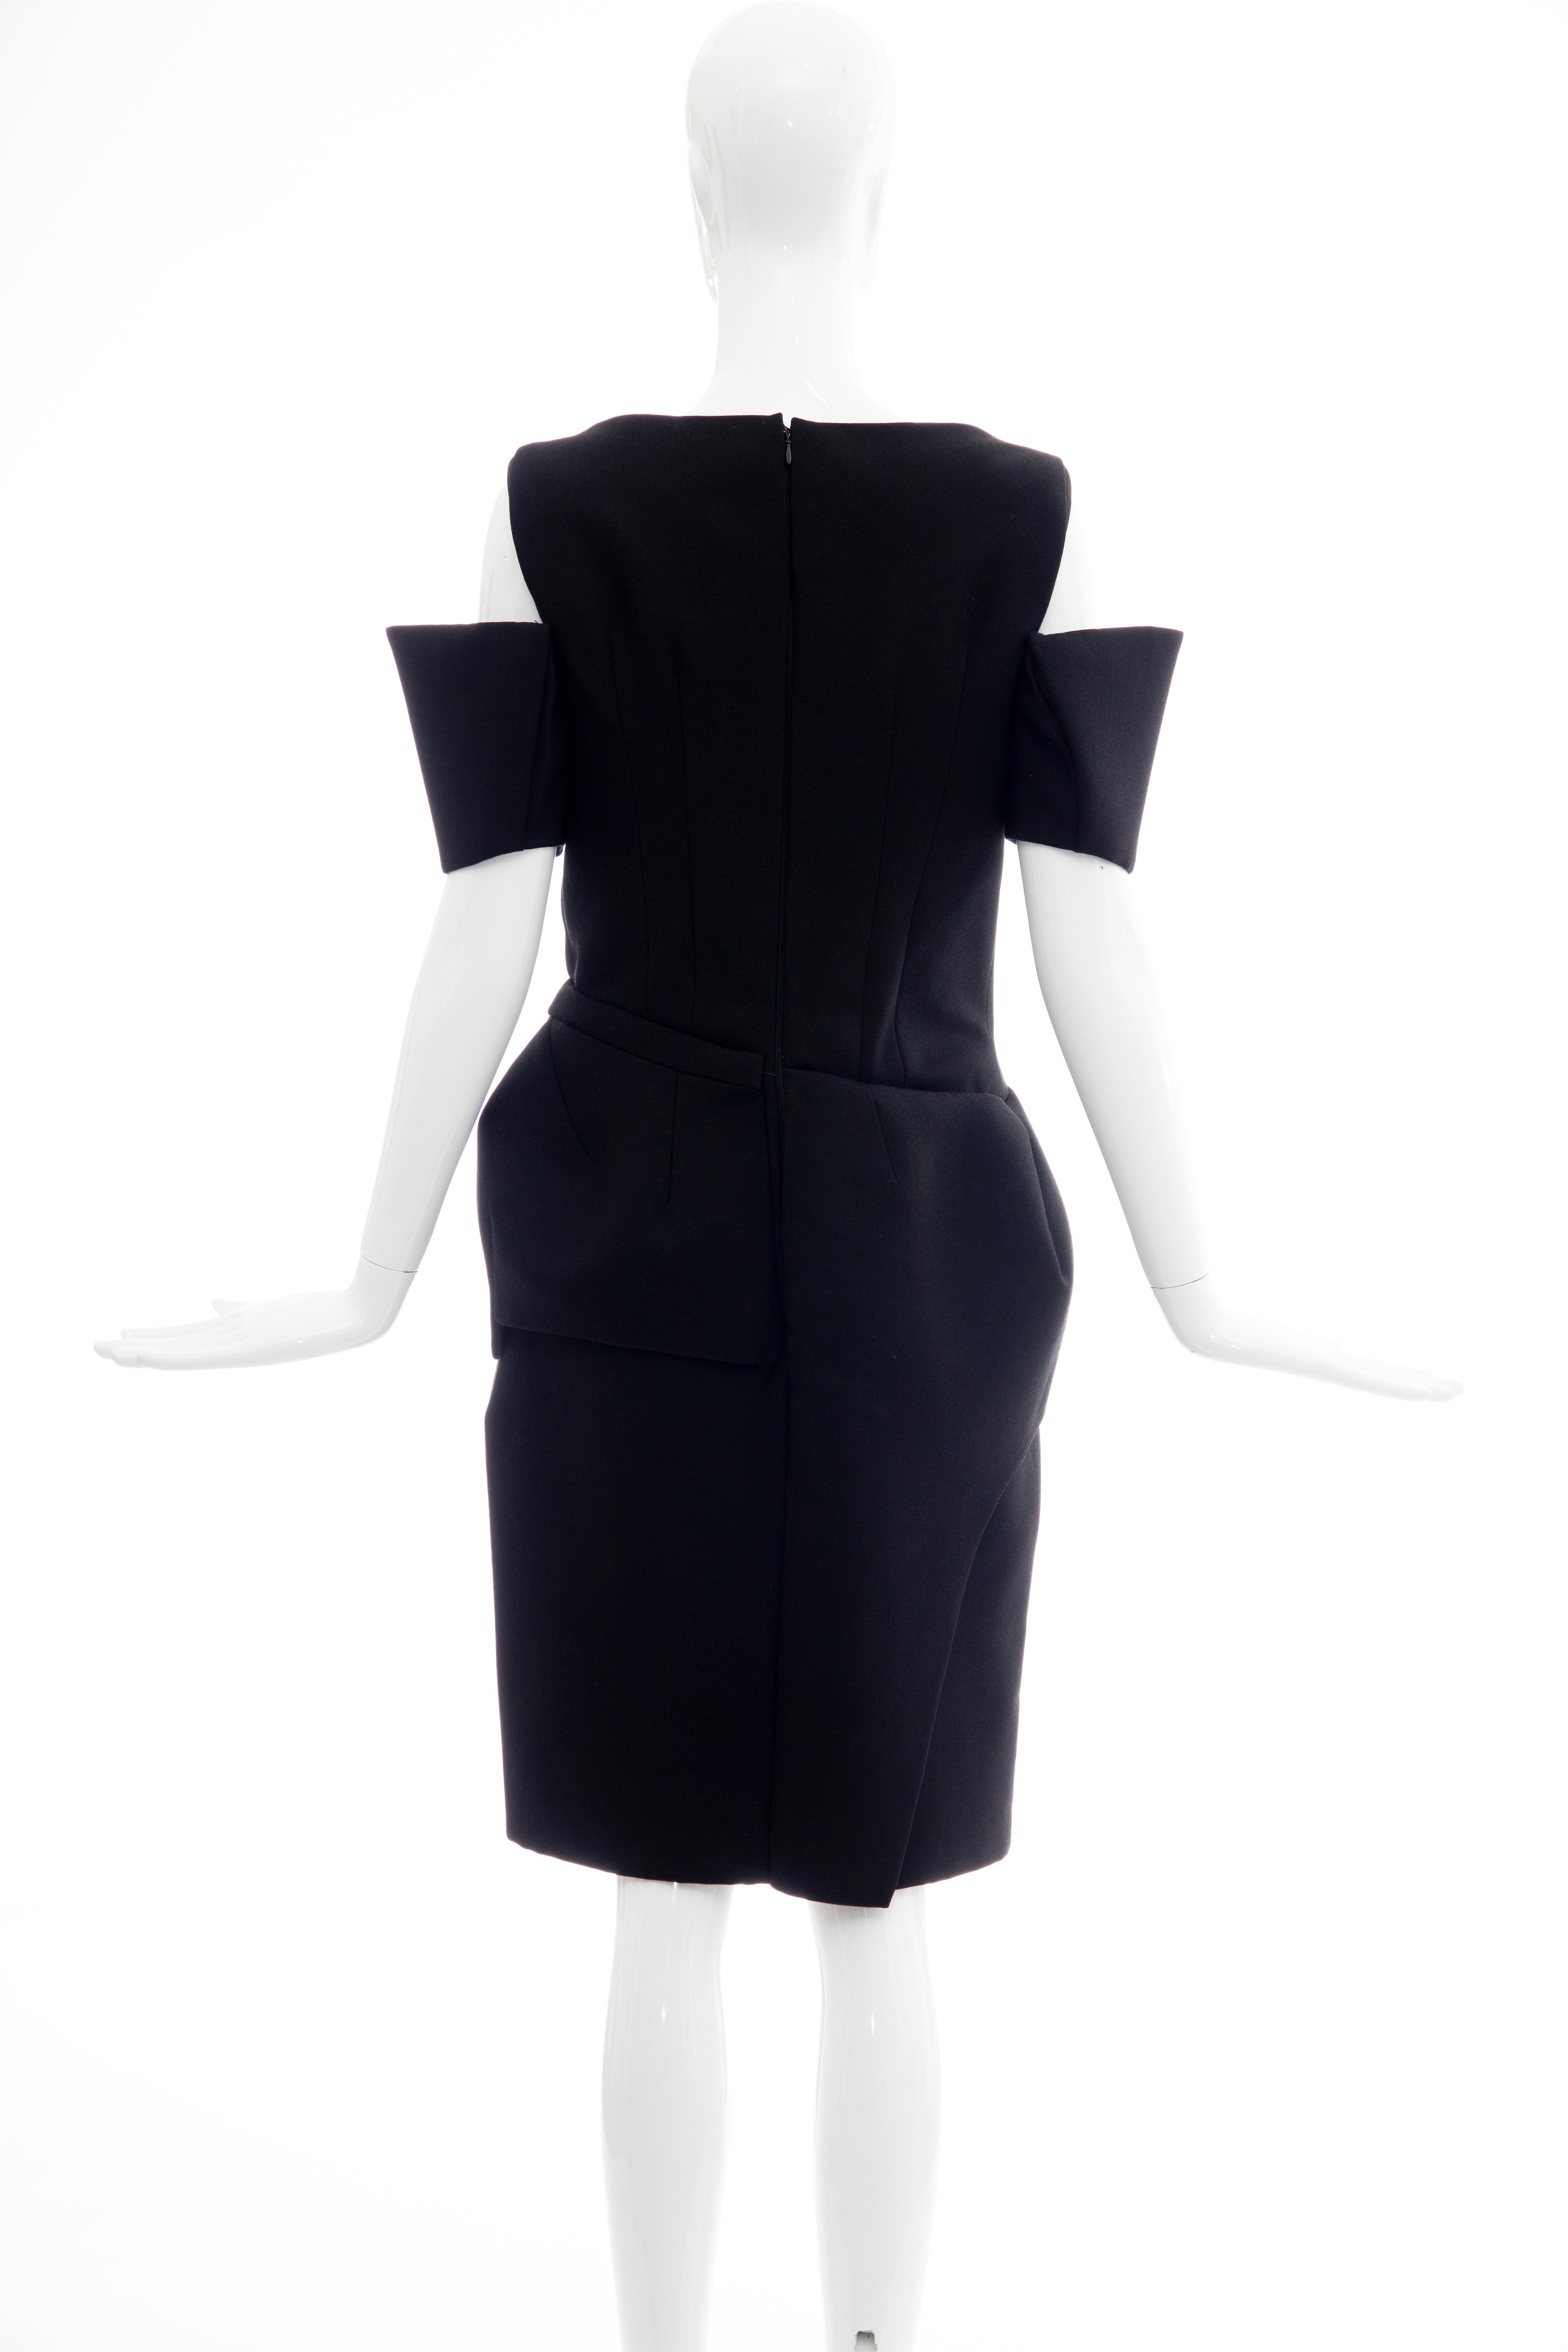 Women's Nicolas Ghesquière for Balenciaga Runway Black Wool Structured Dress, Fall 2008 For Sale